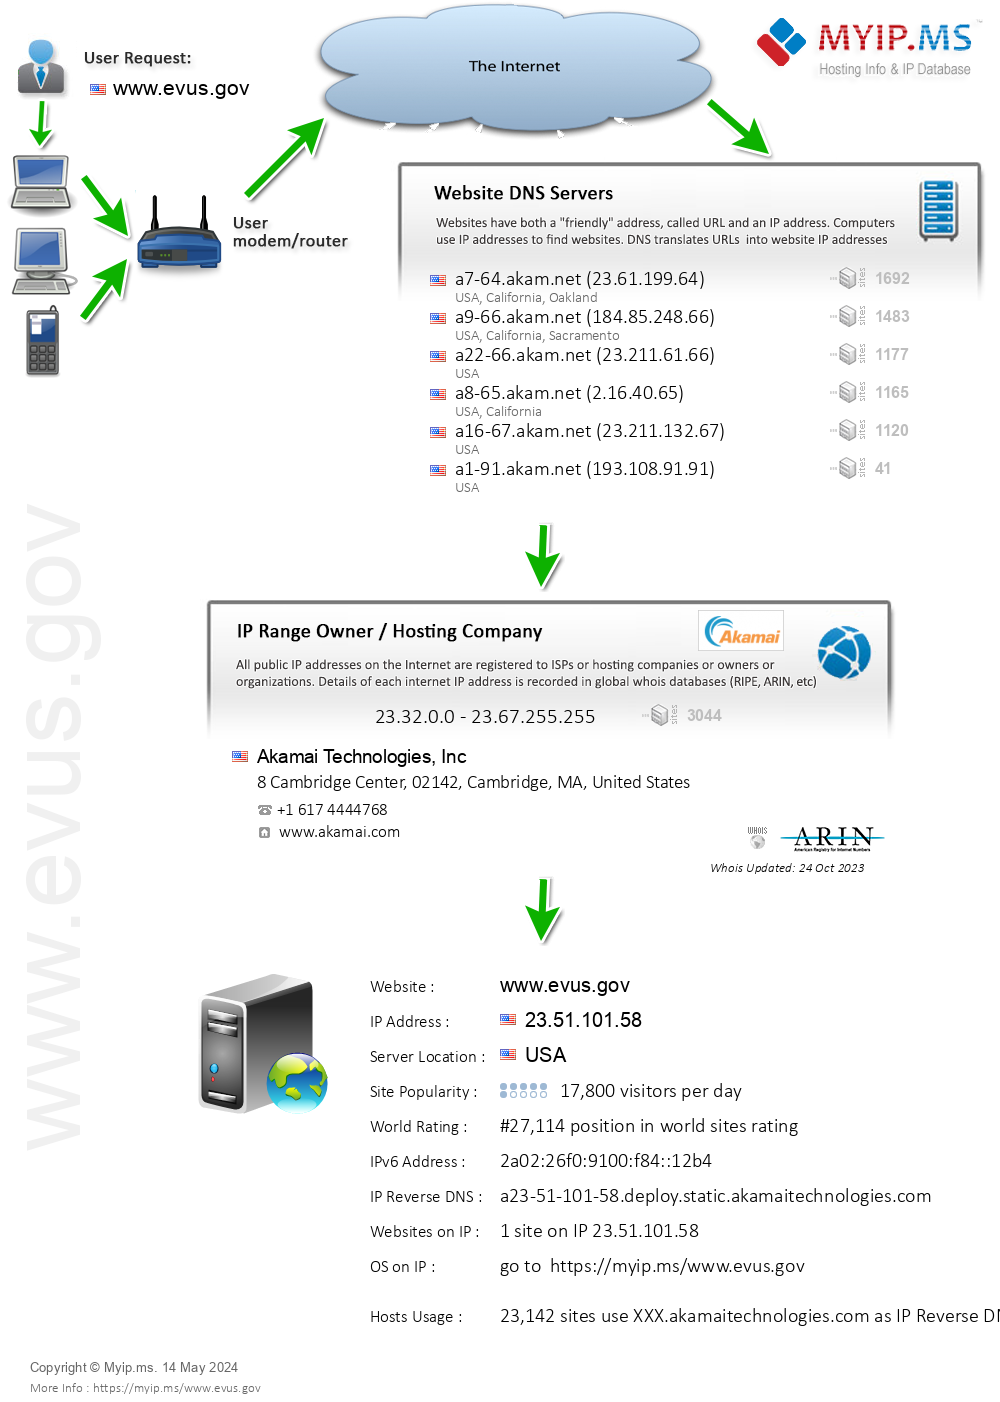 Evus.gov - Website Hosting Visual IP Diagram